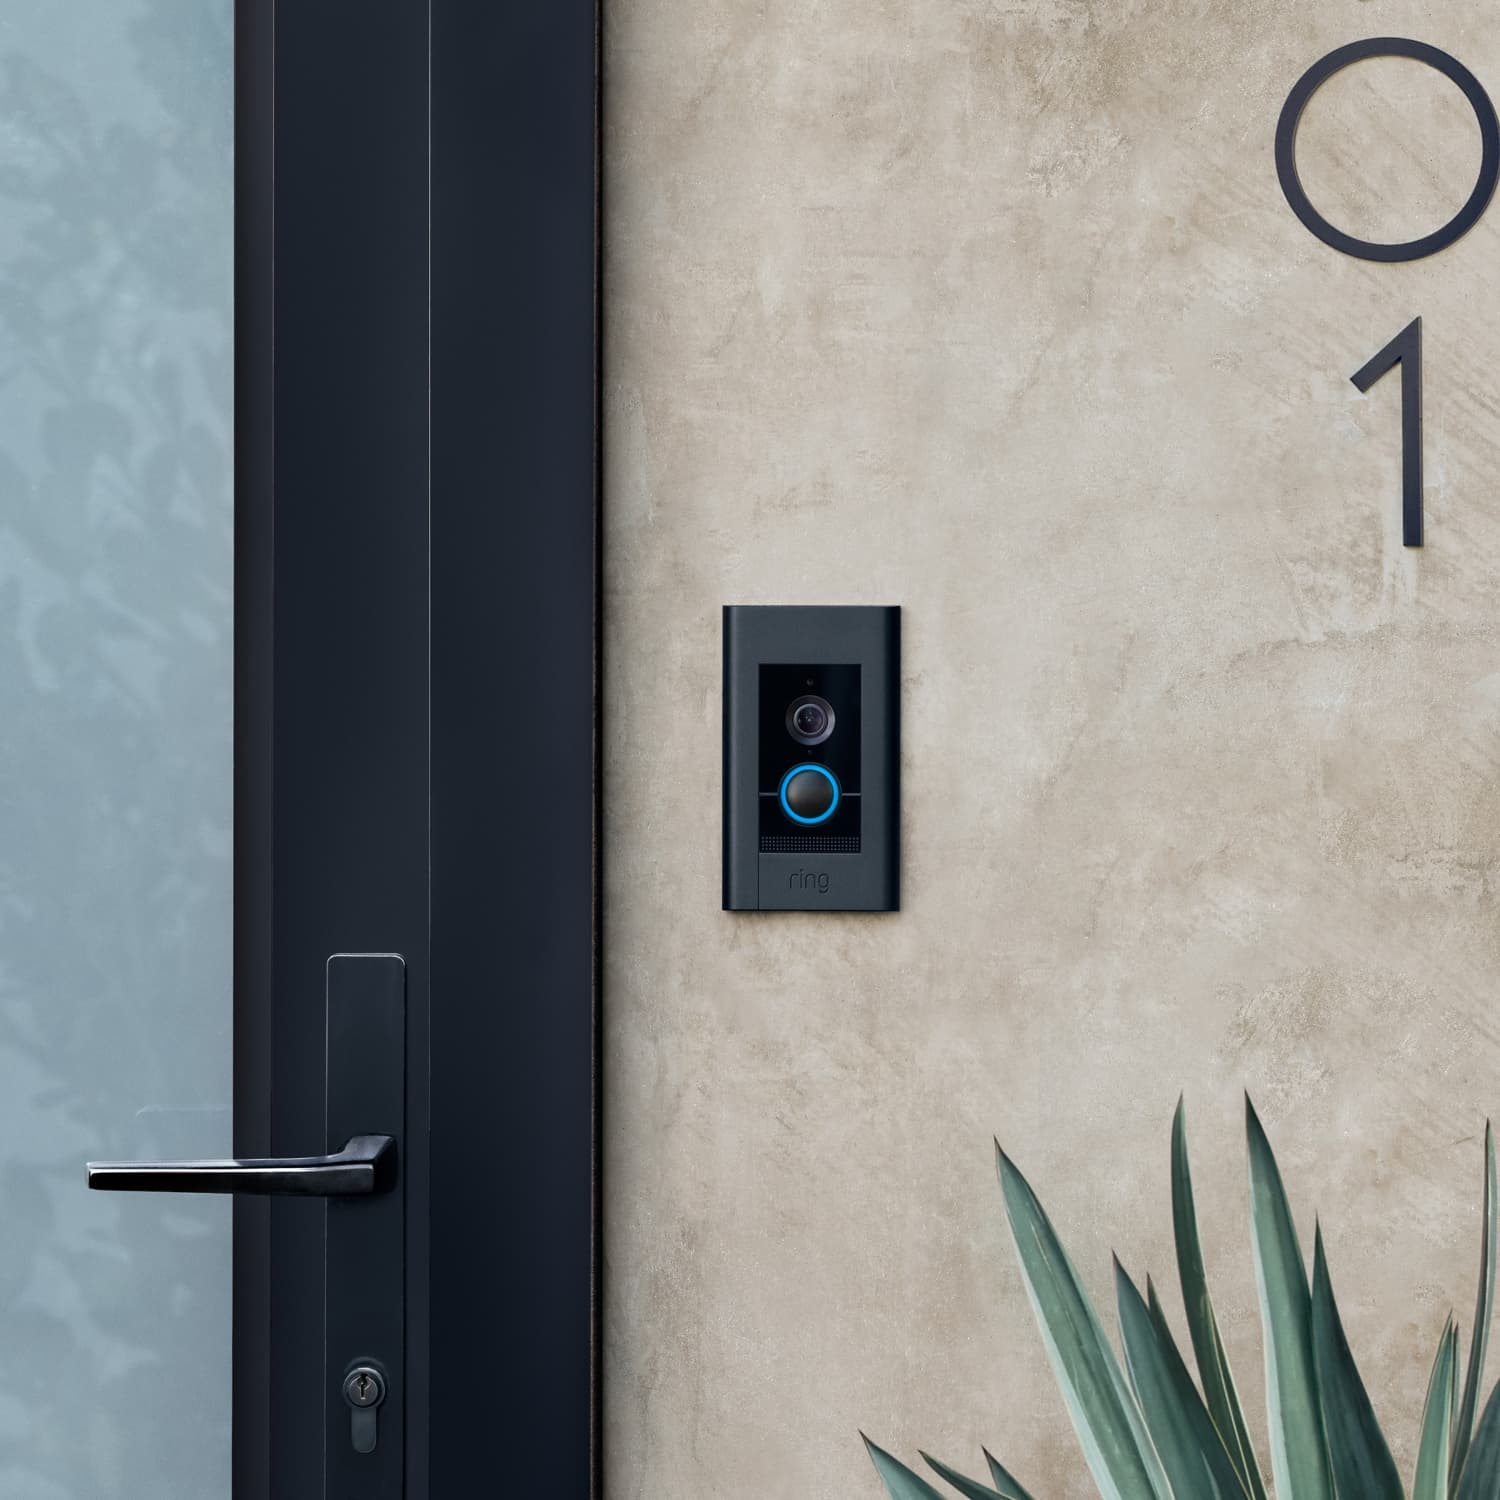 Video Doorbell Elite (Power over Ethernet) - Video Doorbell Elite with satin black finish mounted on a beige wall next to a front door.